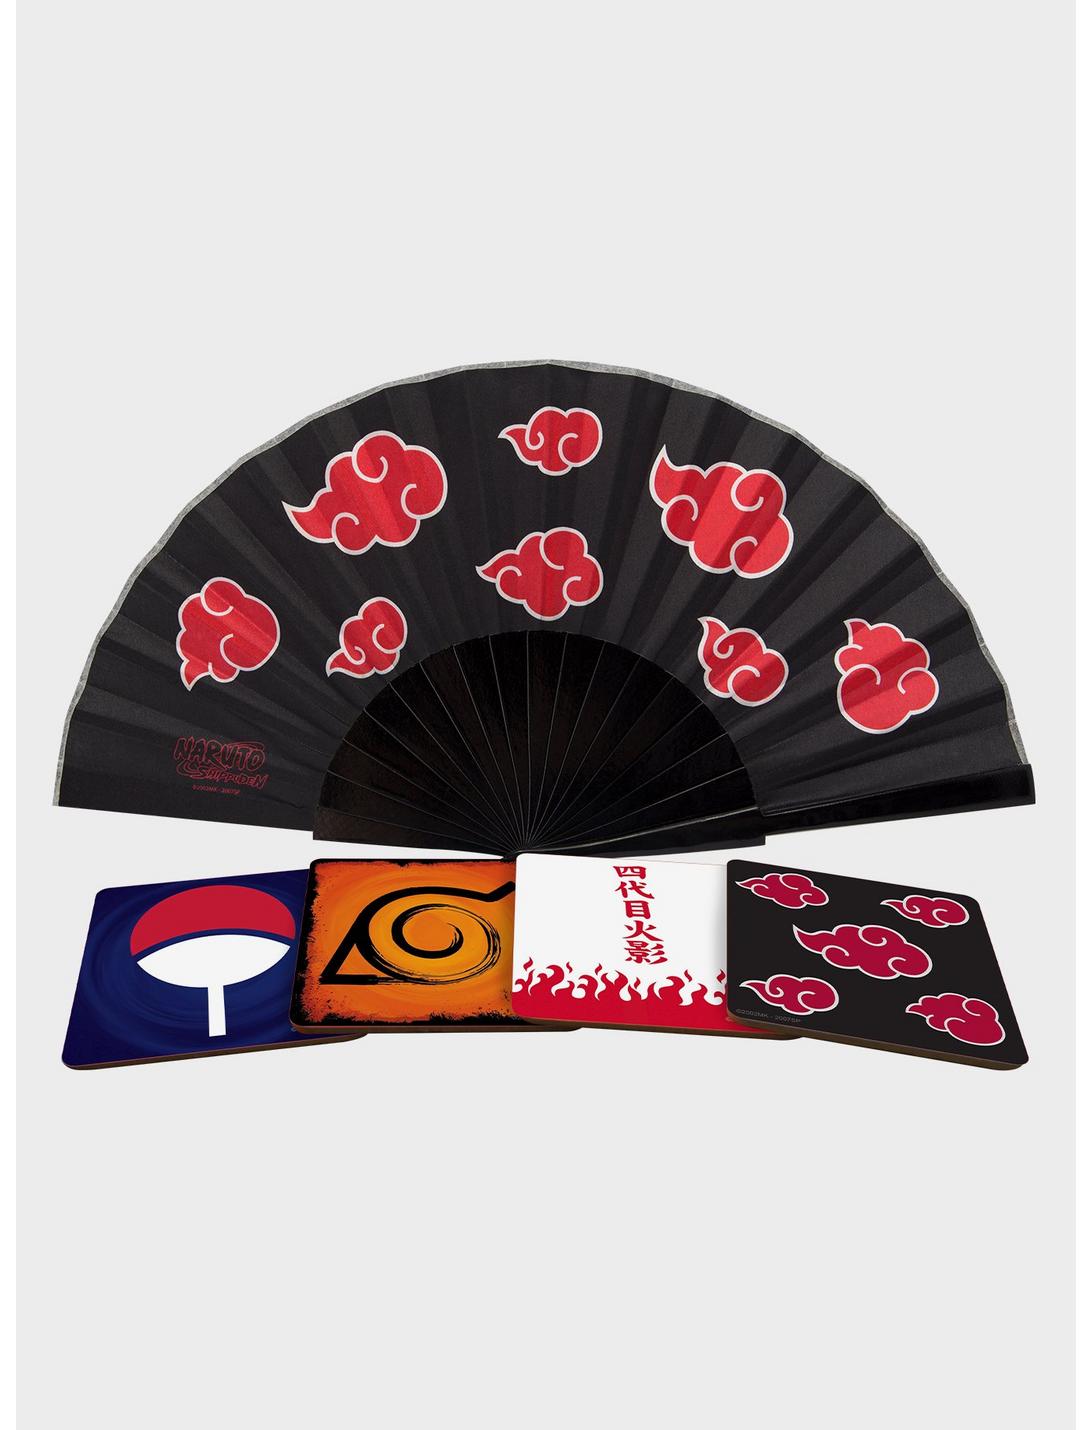 Naruto Shippuden Fan and Coaster Bundle, , hi-res